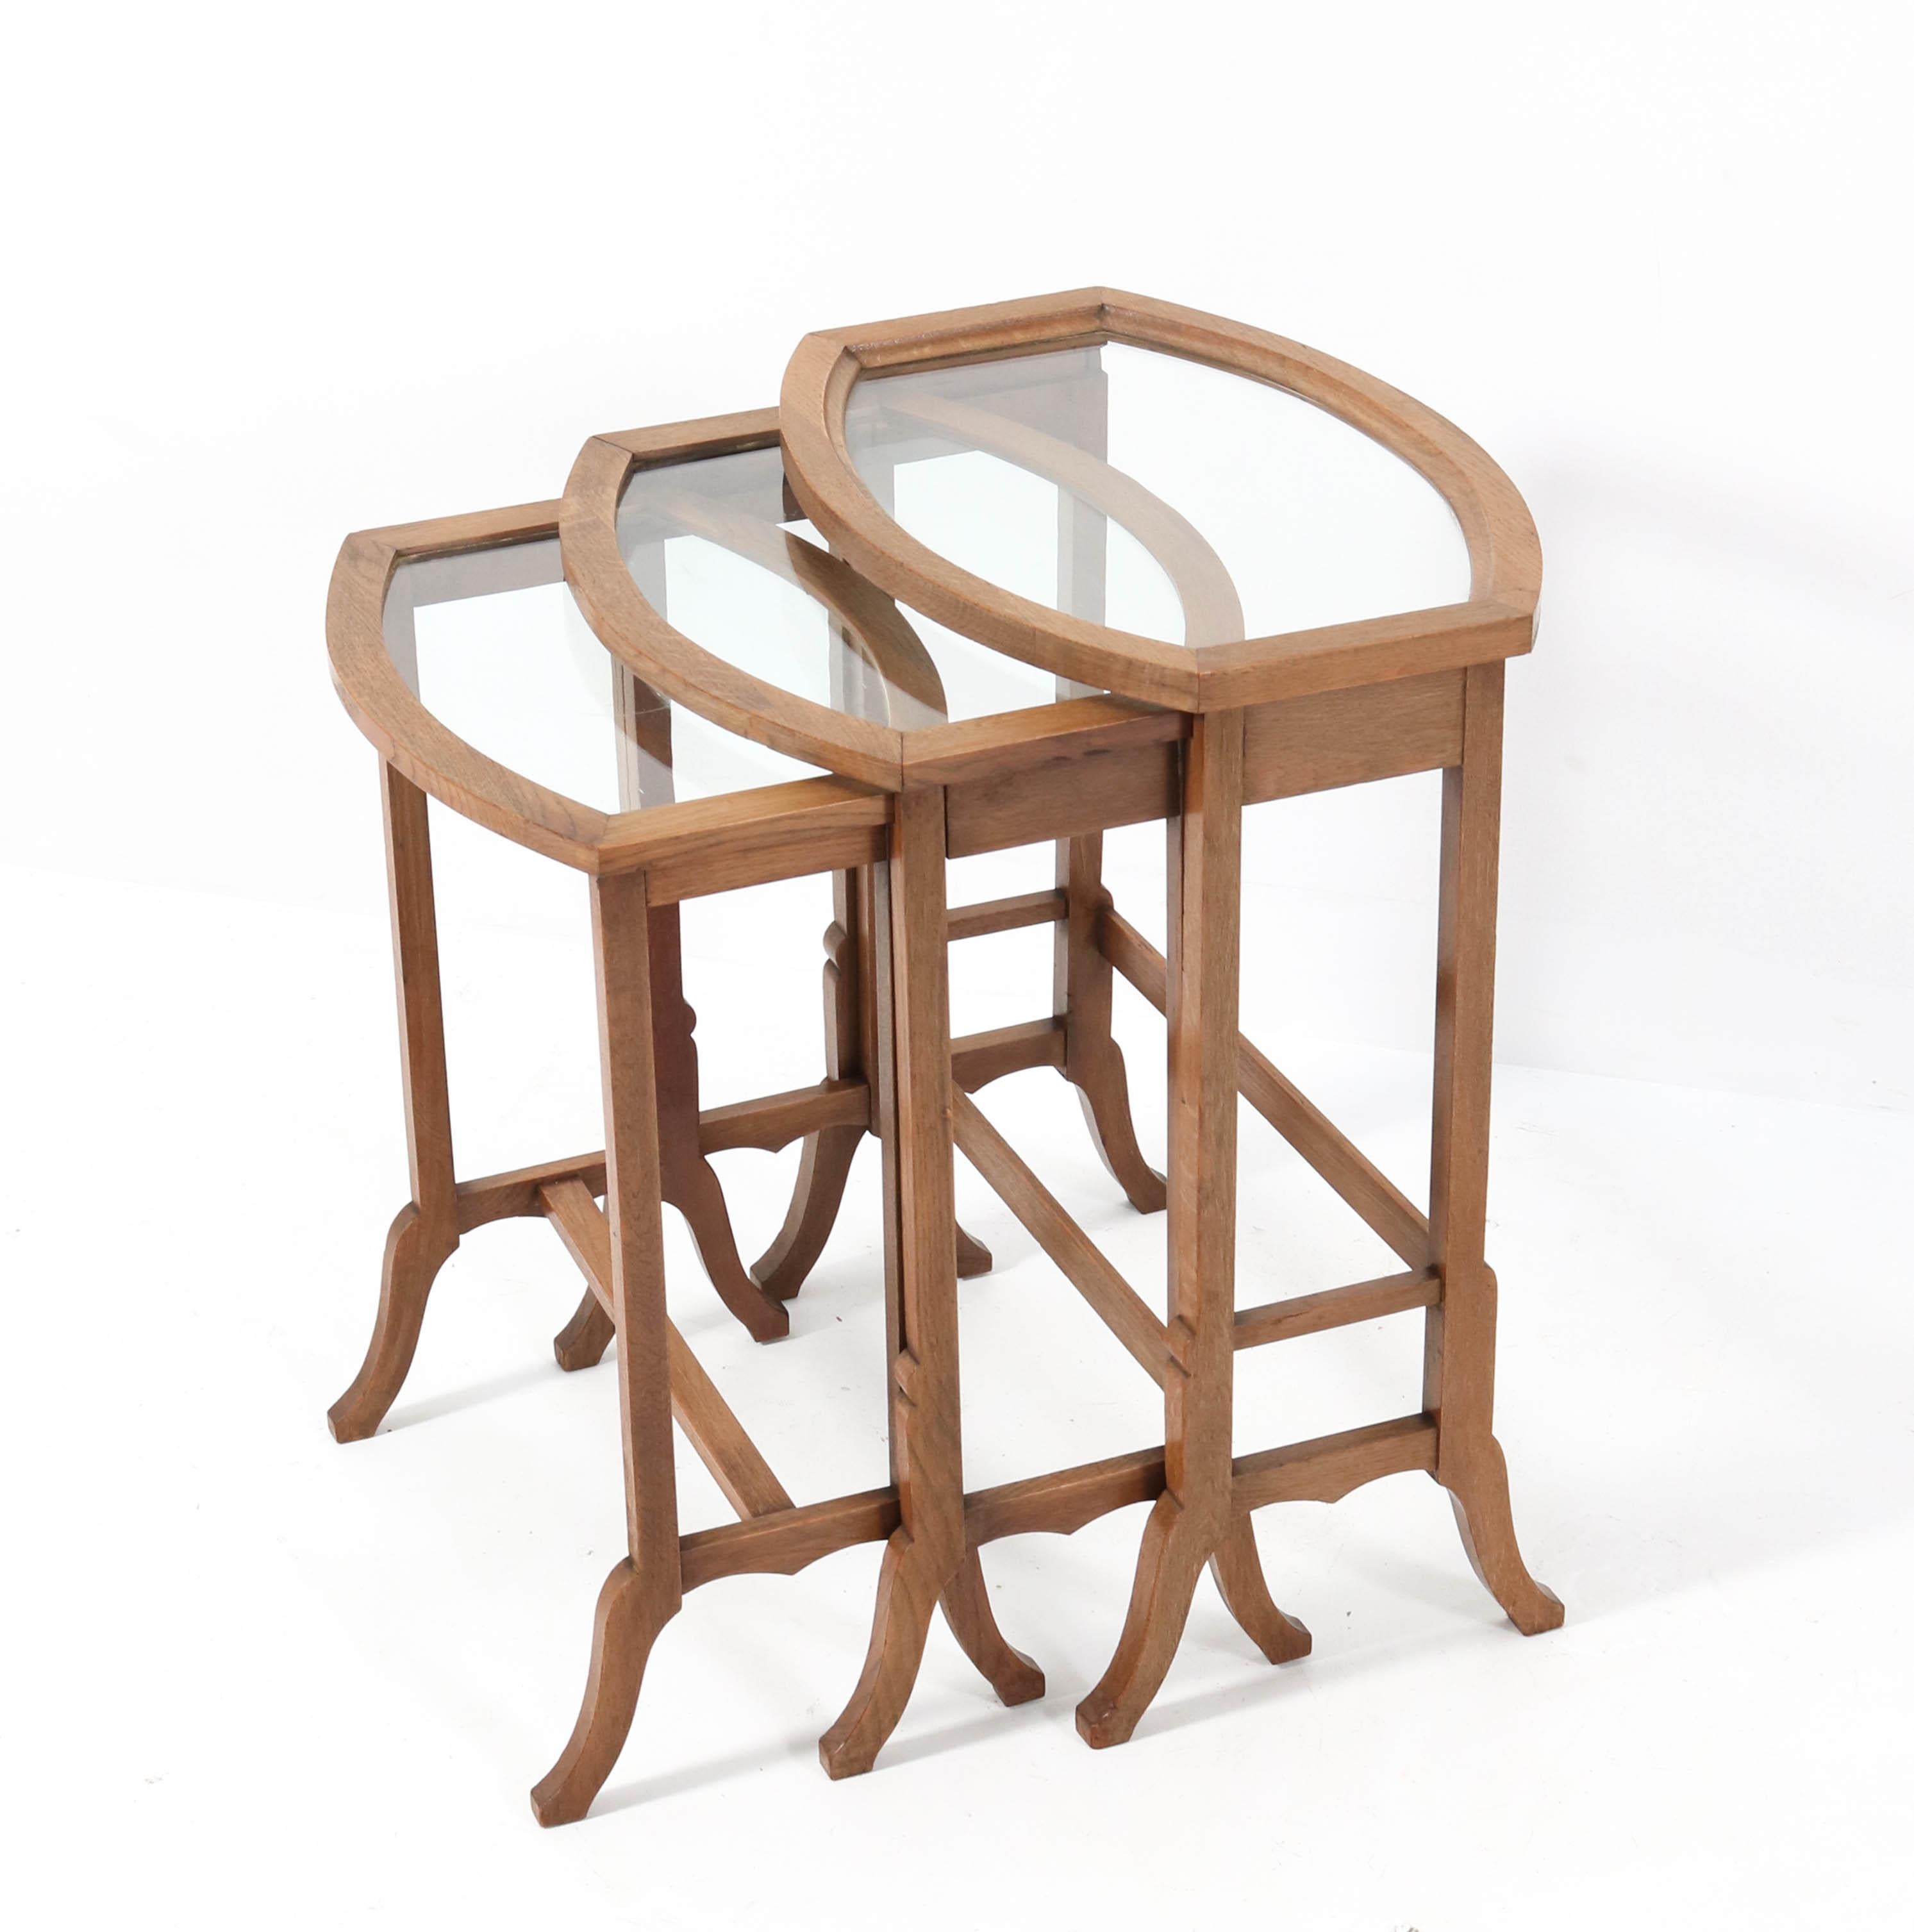 Oak Art Nouveau Nesting Tables with Glass Tops, 1900s For Sale 1